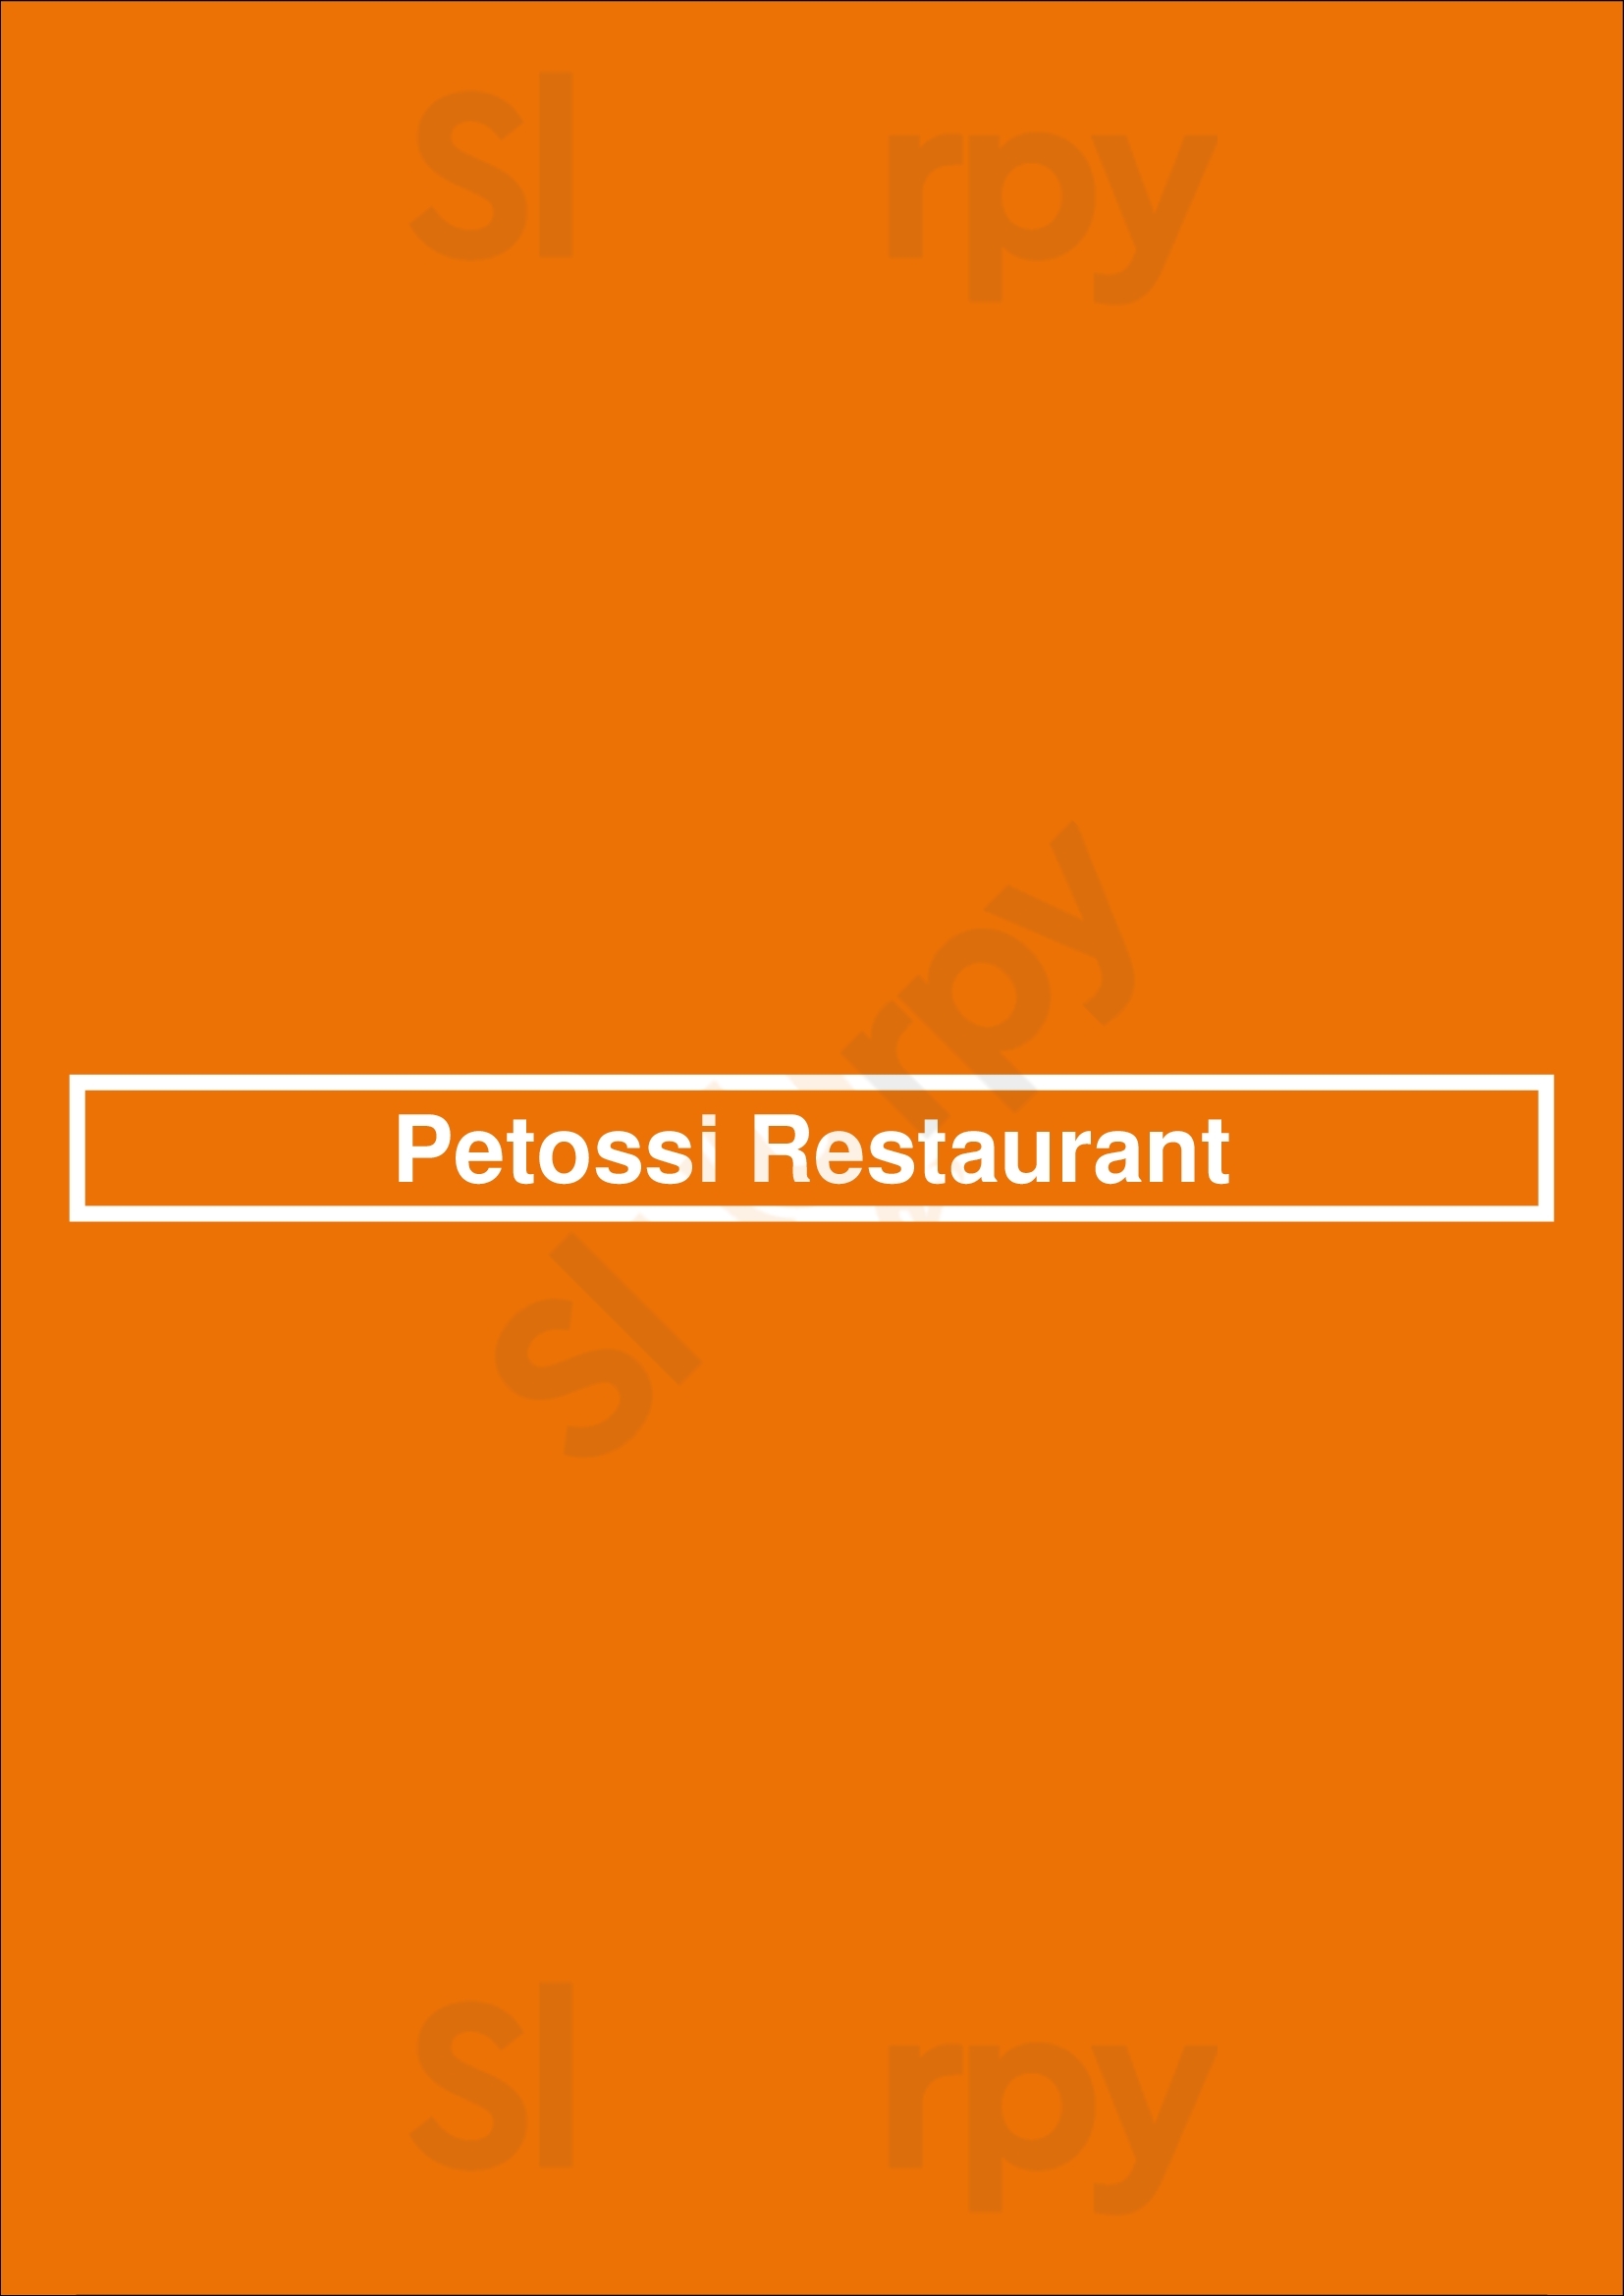 Petossi Restaurant Haarlem Menu - 1